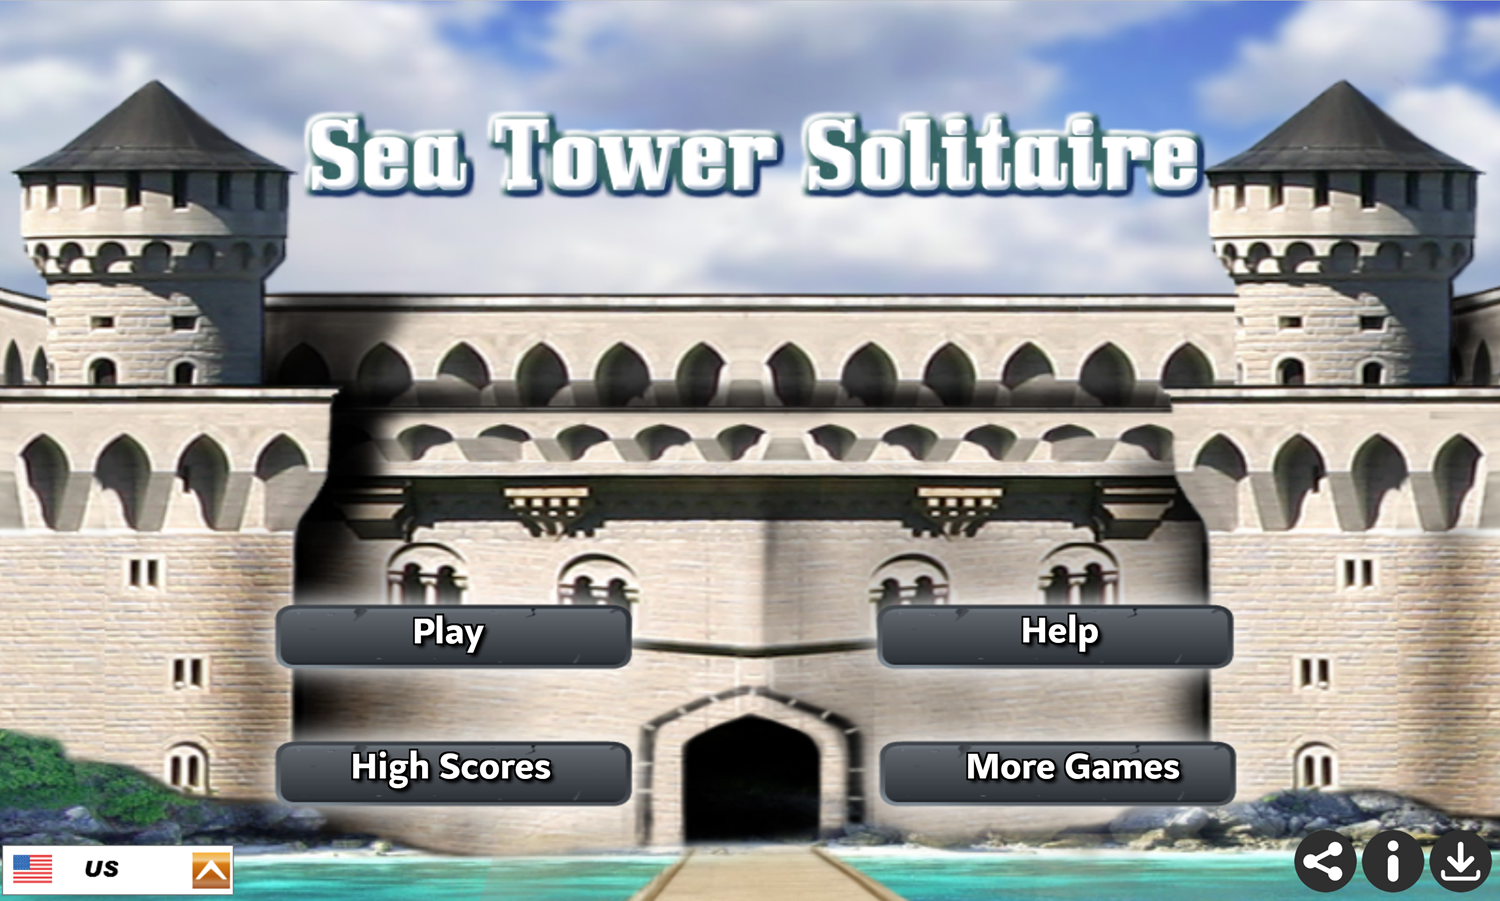 Sea Tower Solitaire Game Welcome Screen Screenshot.